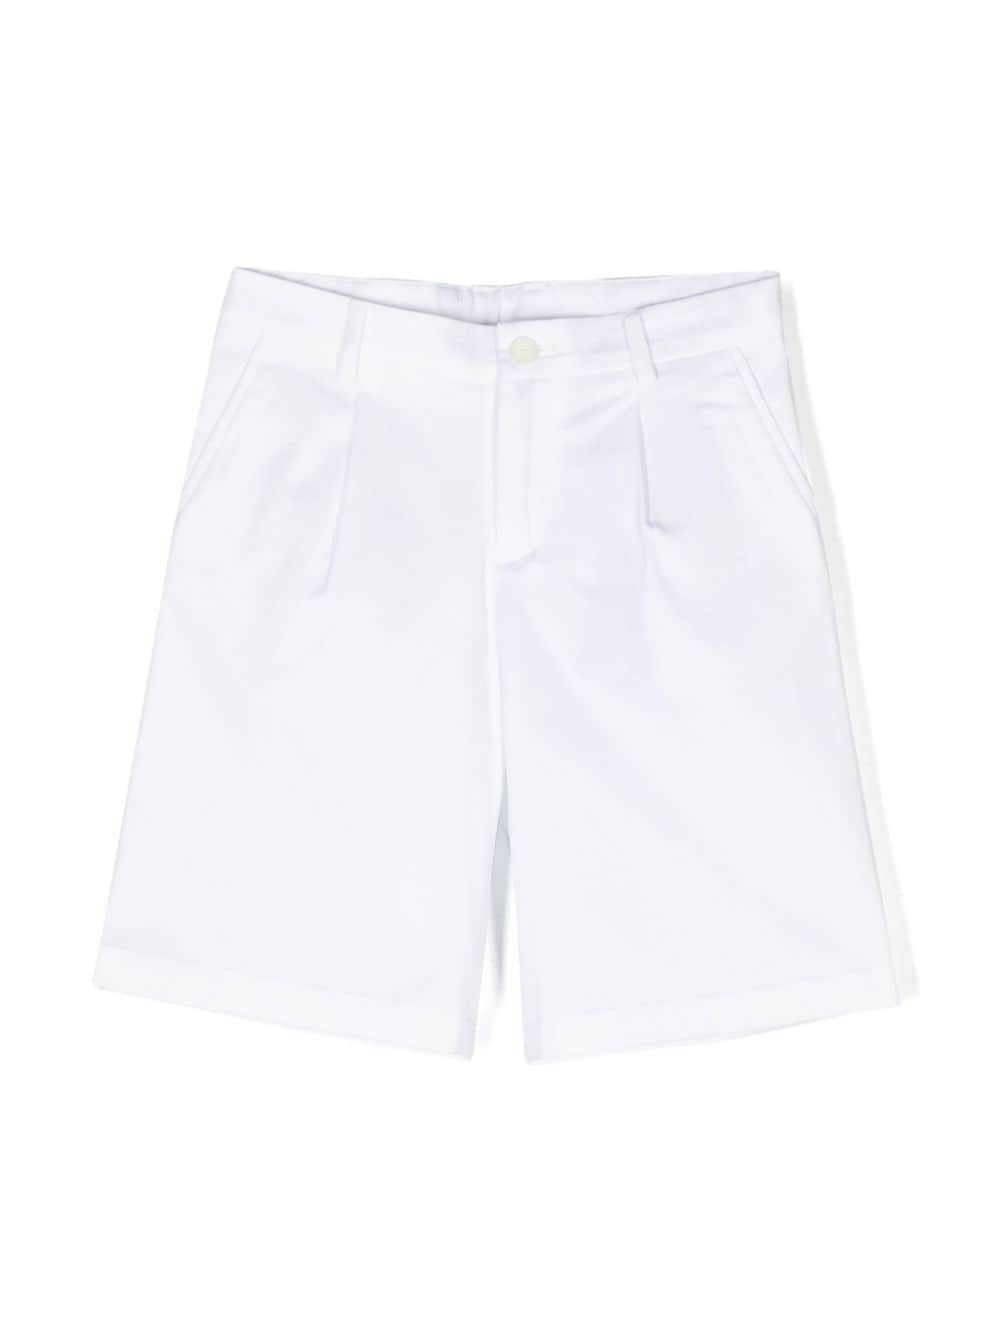 White Bermuda shorts for newborns with logo